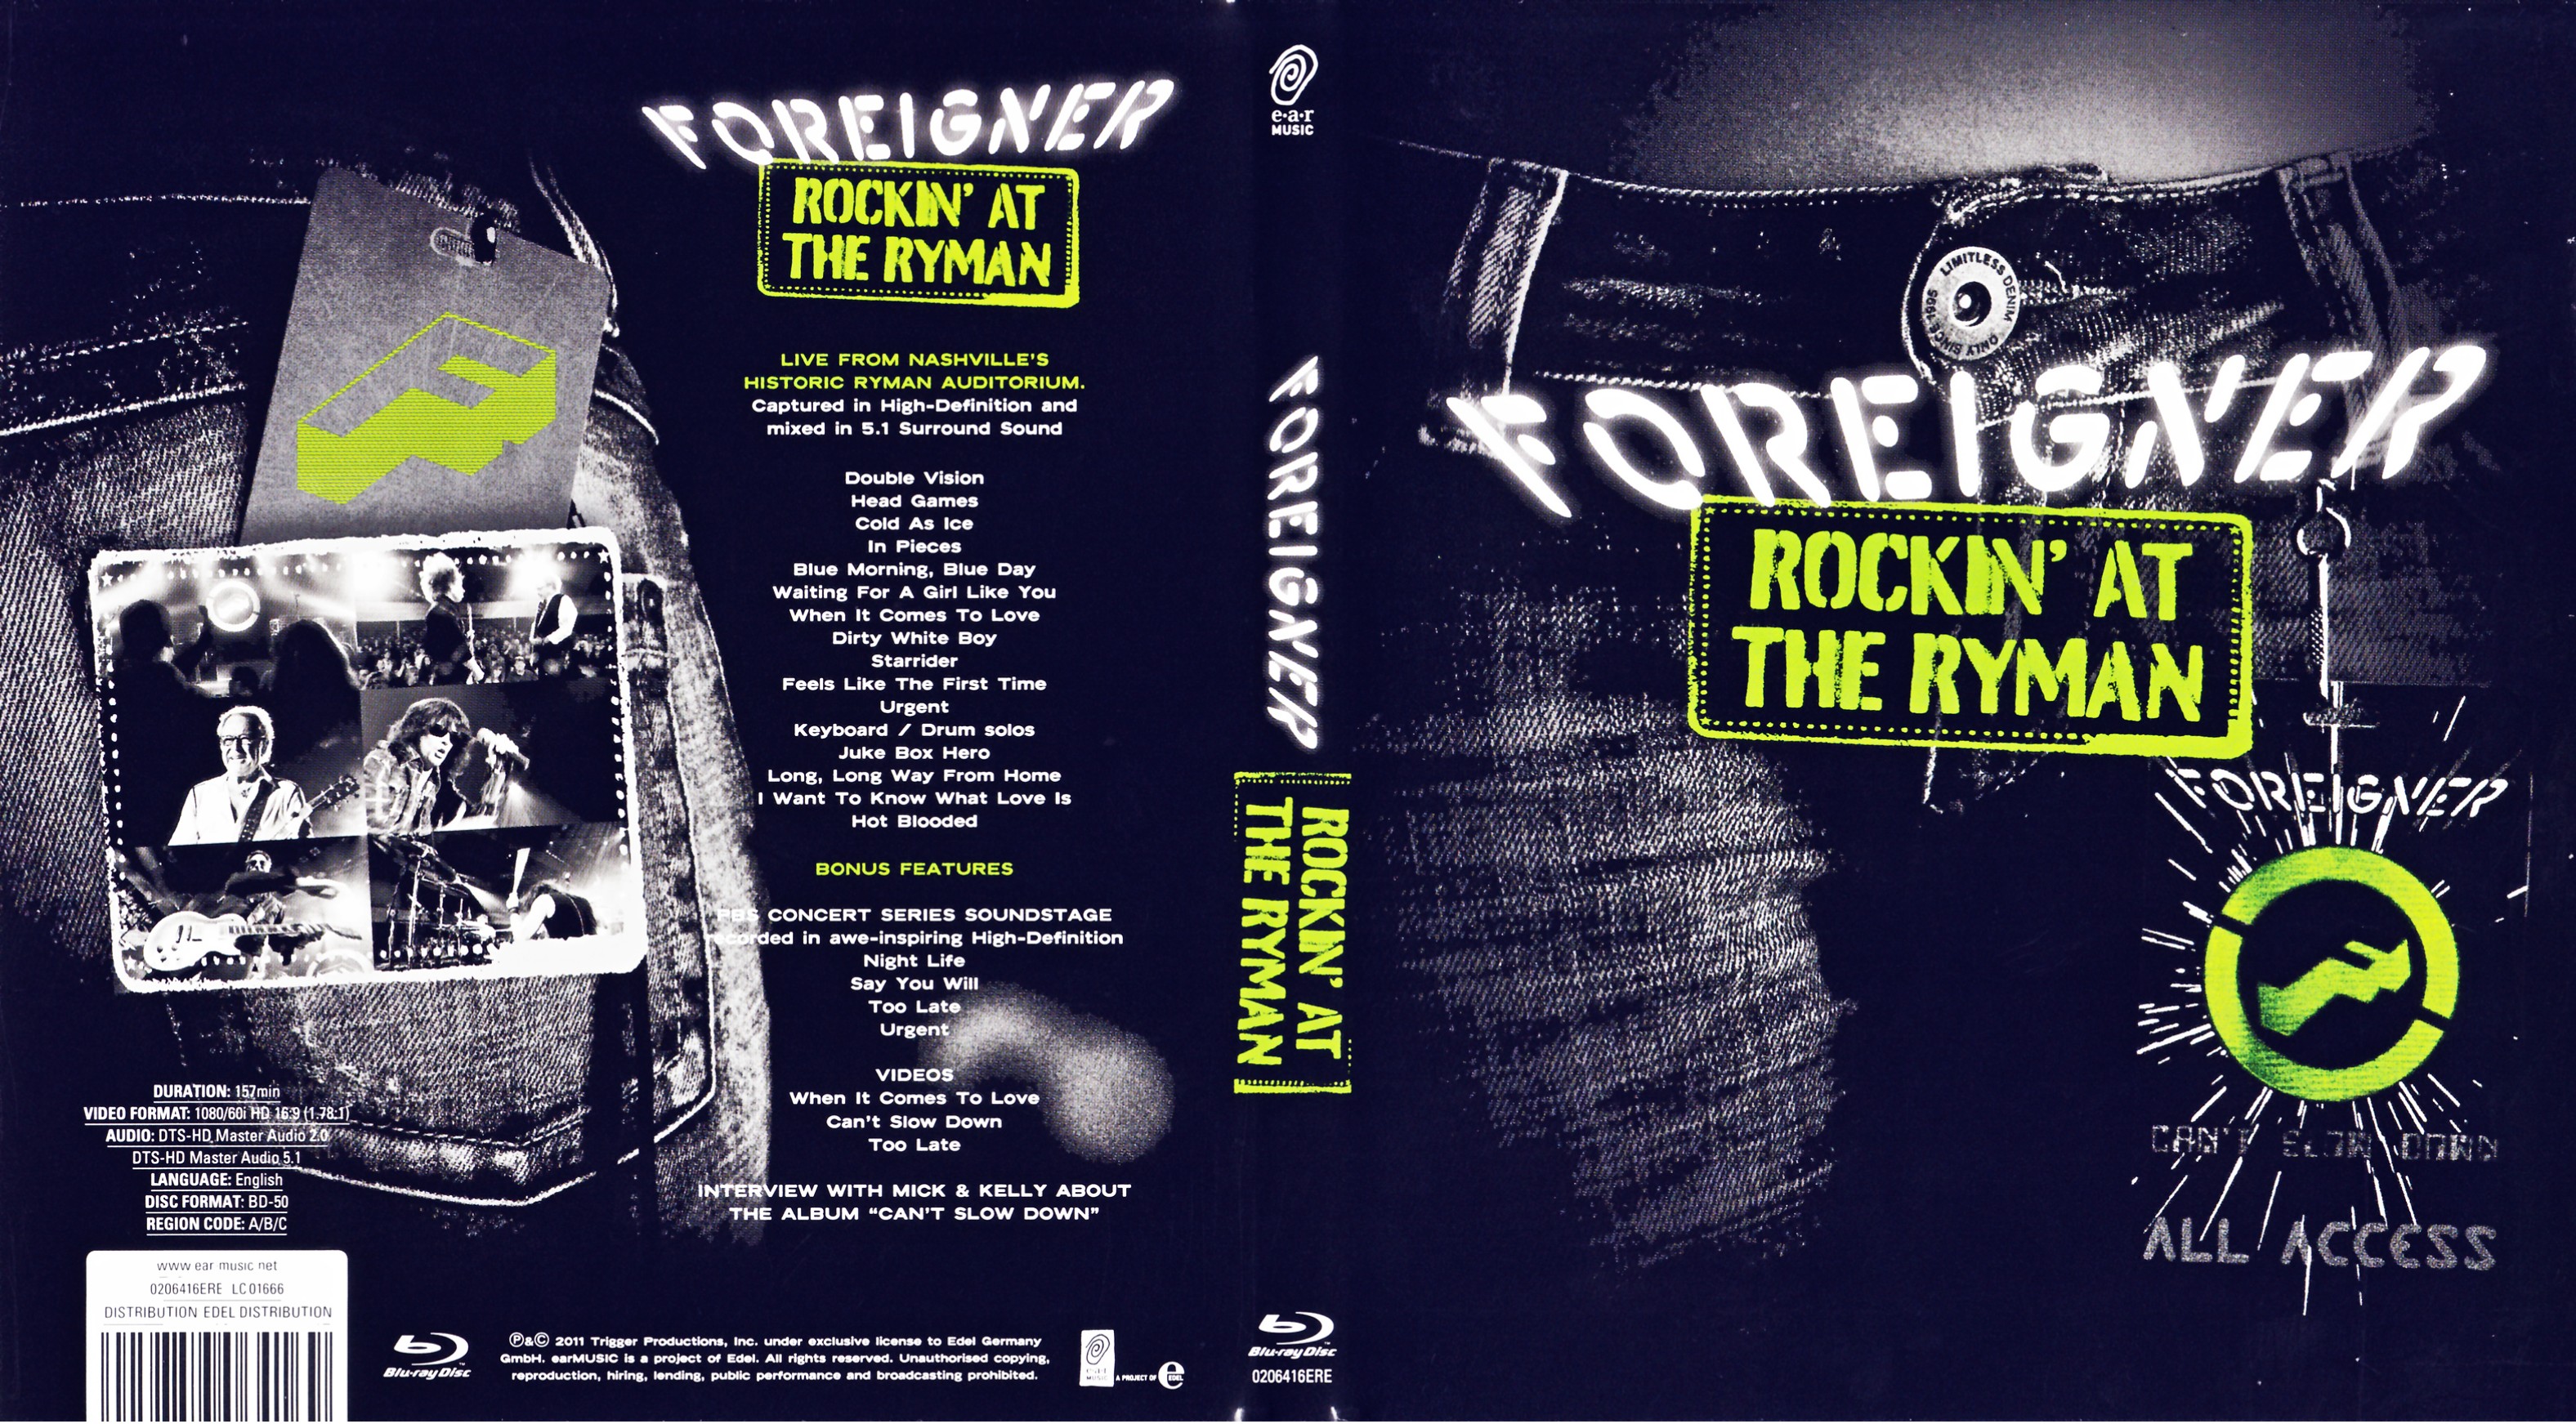 Jaquette DVD foreigner - Rockin